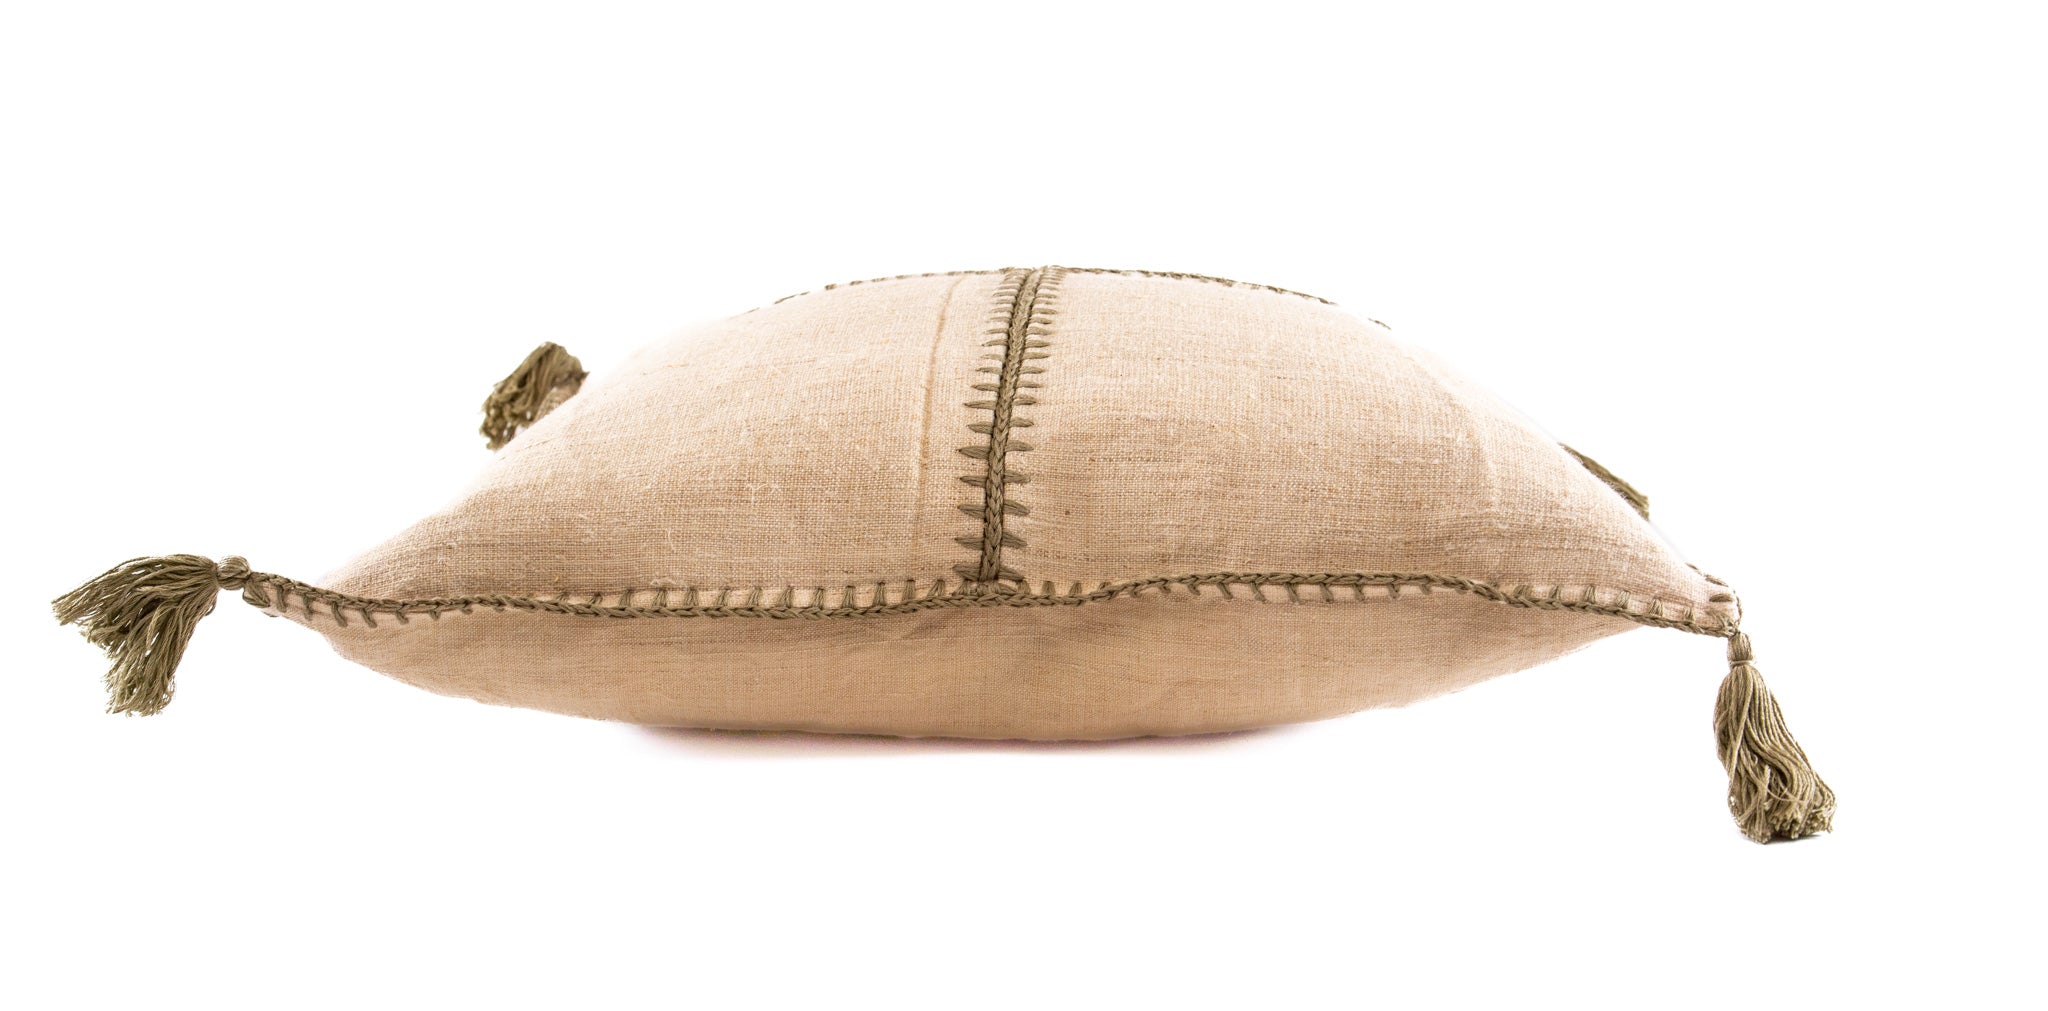 Pillow: Antique Hungarian handwoven hemp, hand stitched - P415